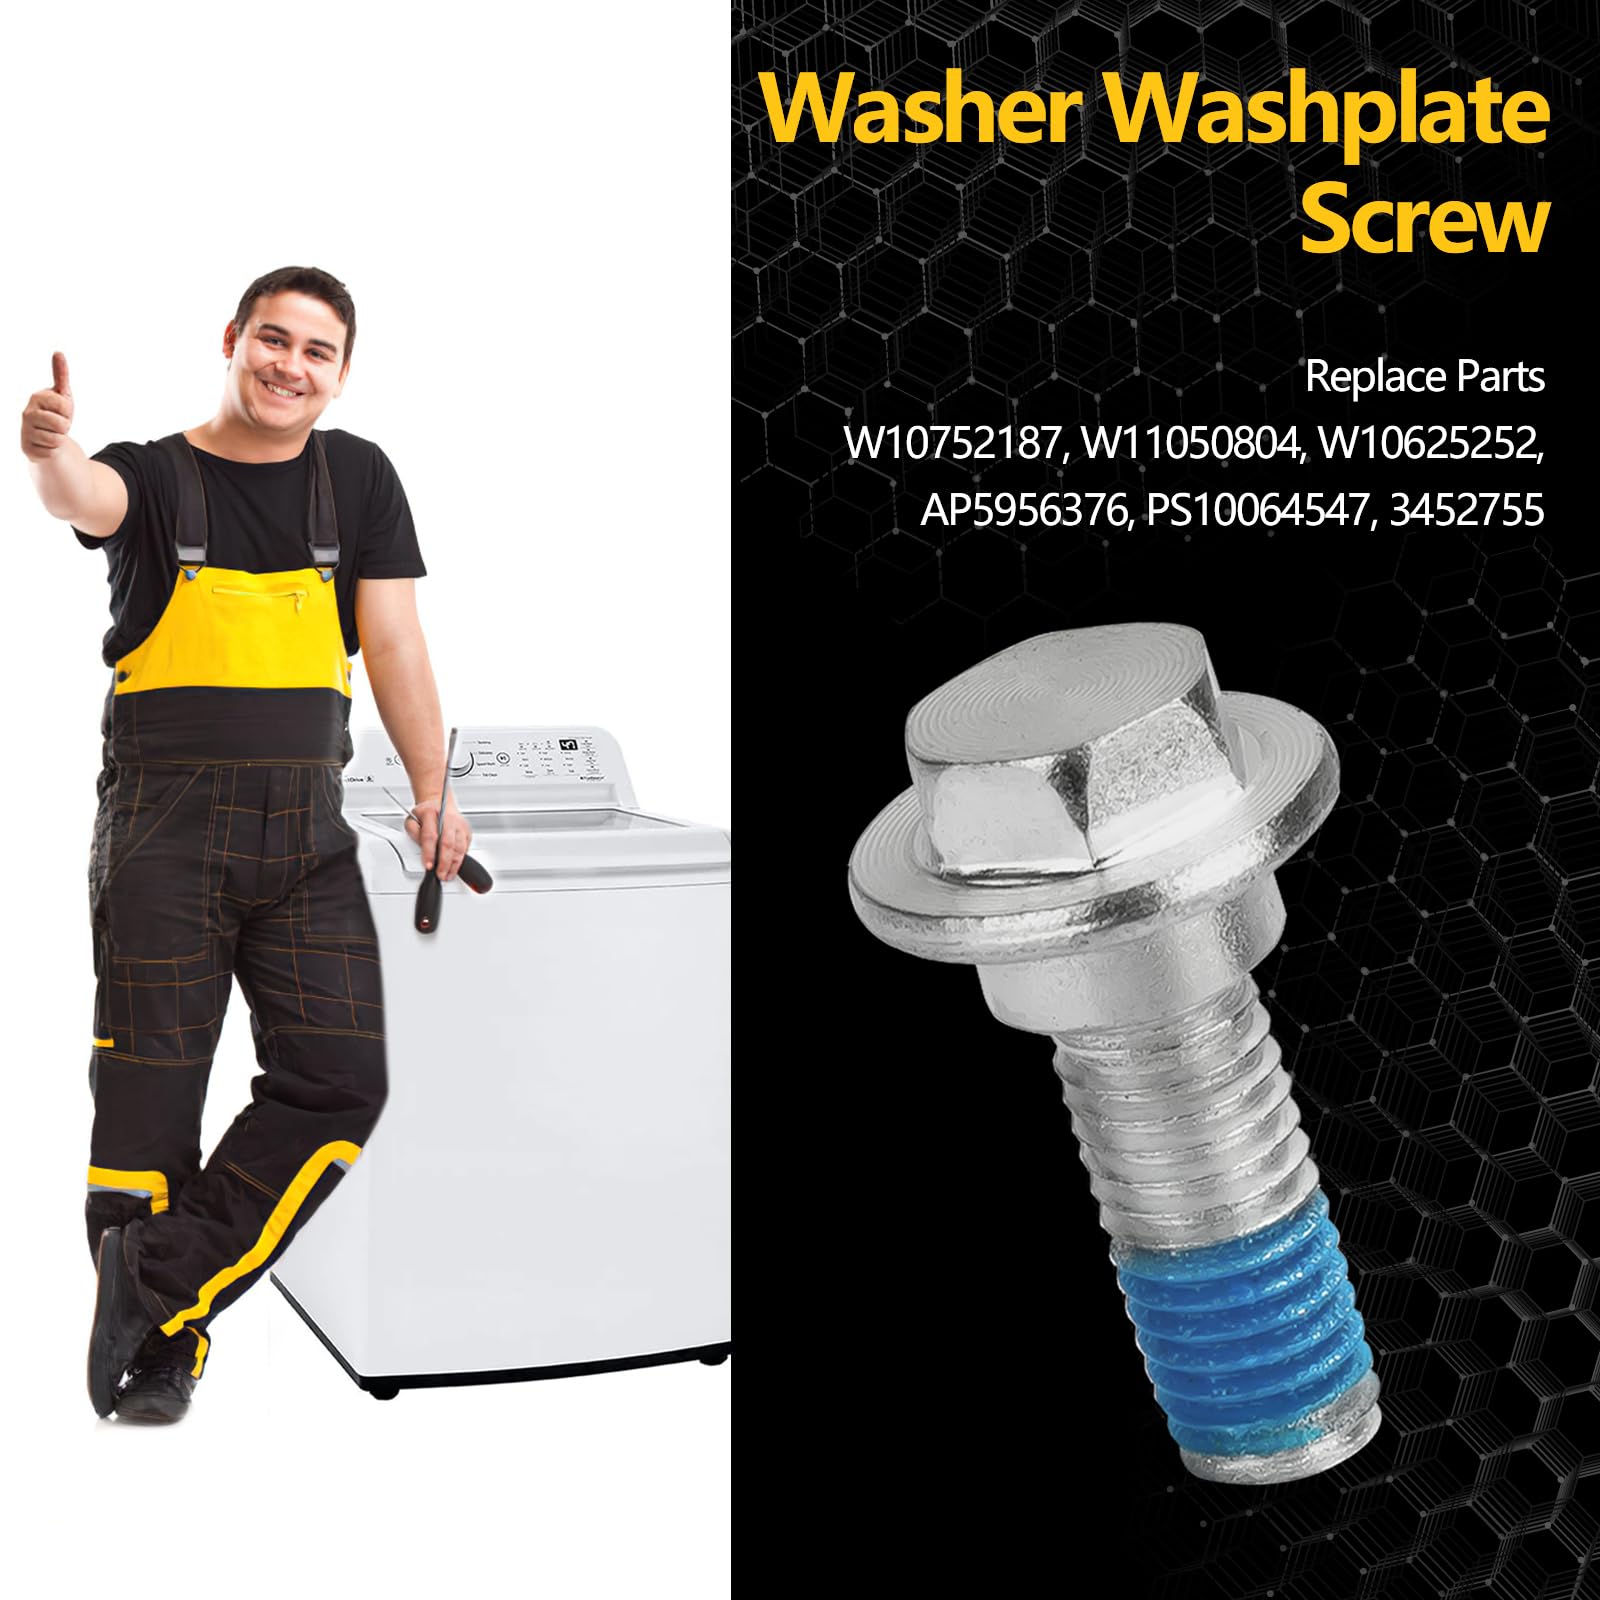 W10752187 W11050804 Washer Washplate Screw Compatible with Whirlpool Washing Machine Washplate Agitator Bolt - 2 Pack